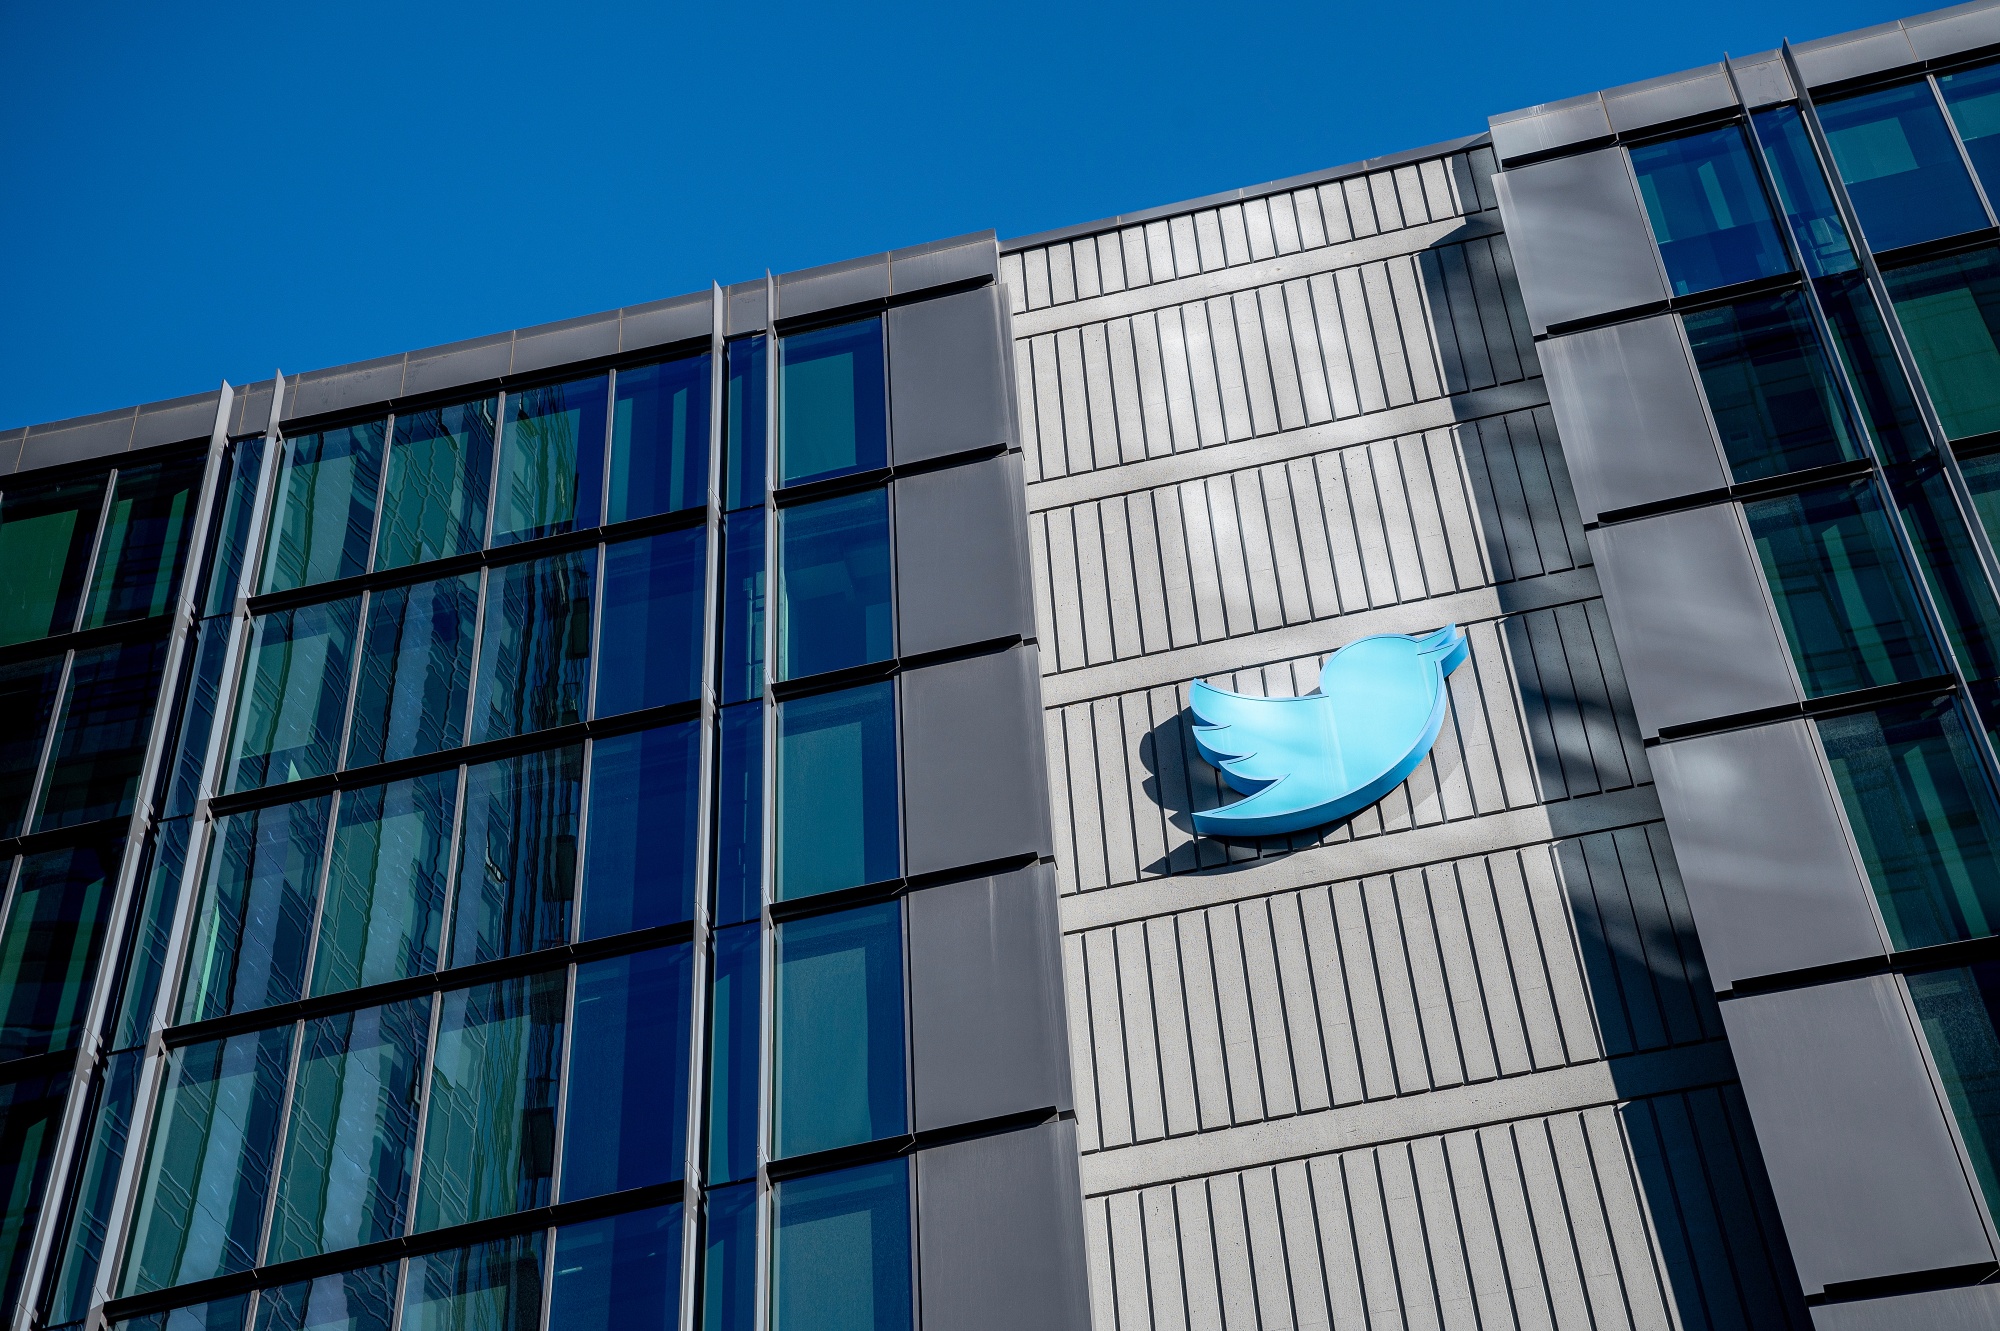 Twitter’s headquarters in San Francisco.